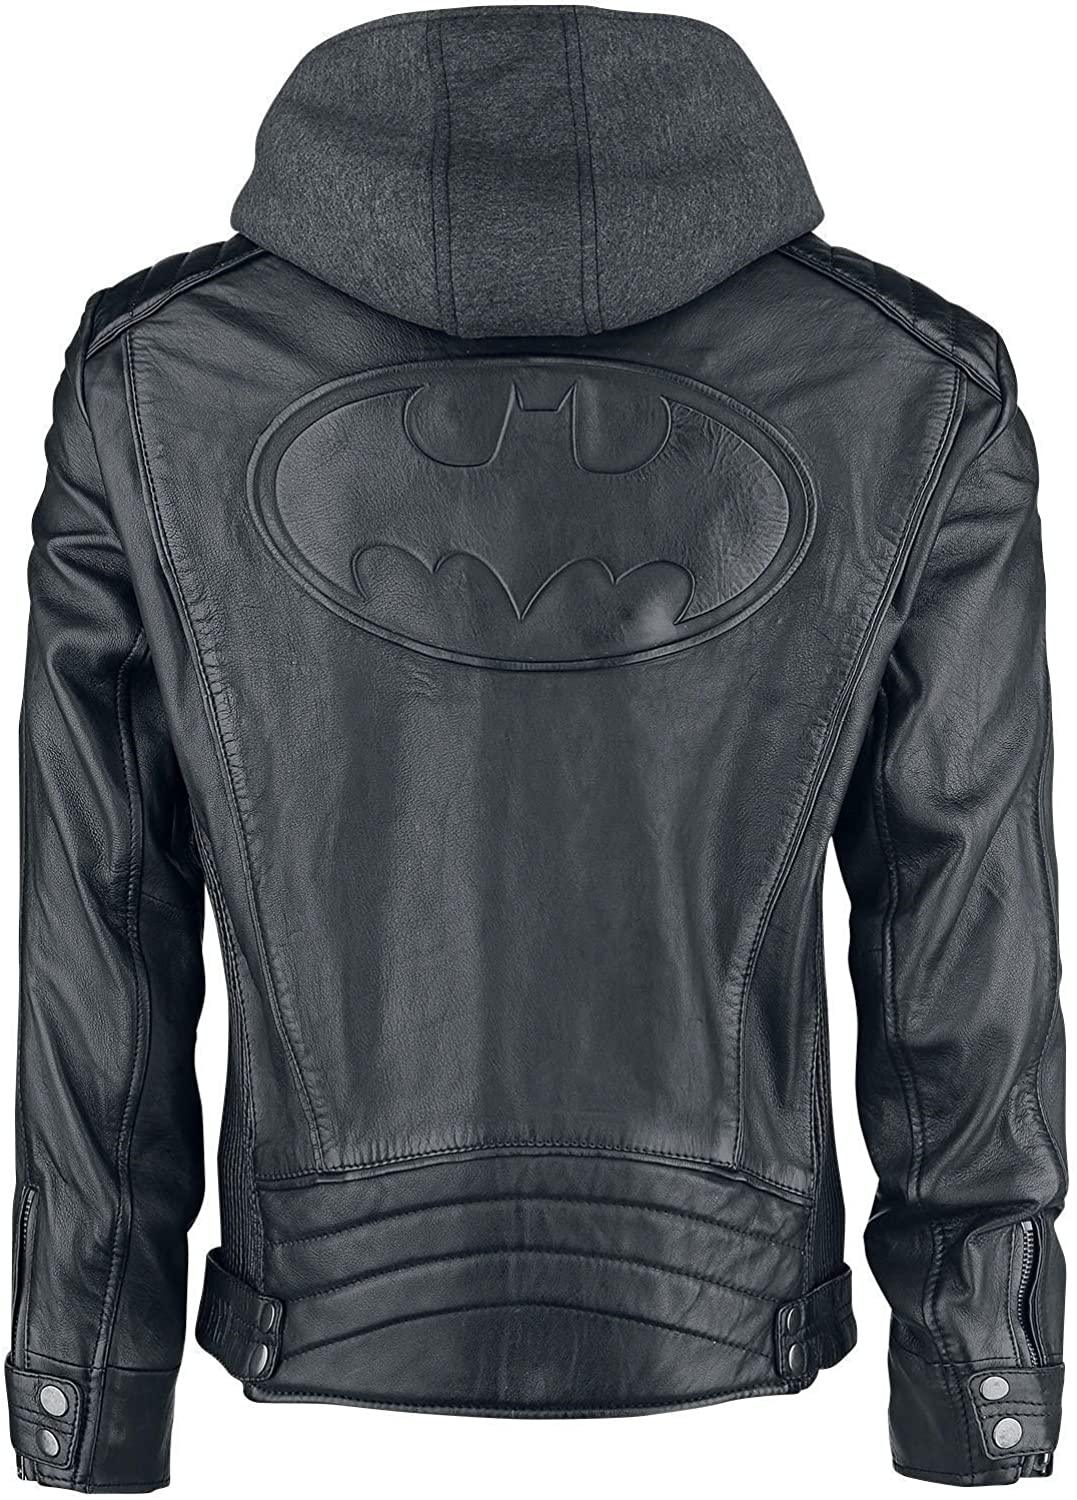 Batman Arkham Knight Inspired Men's Black Leather Hooded Jacket - Sleek Slim-Fit Style - Button Stitched